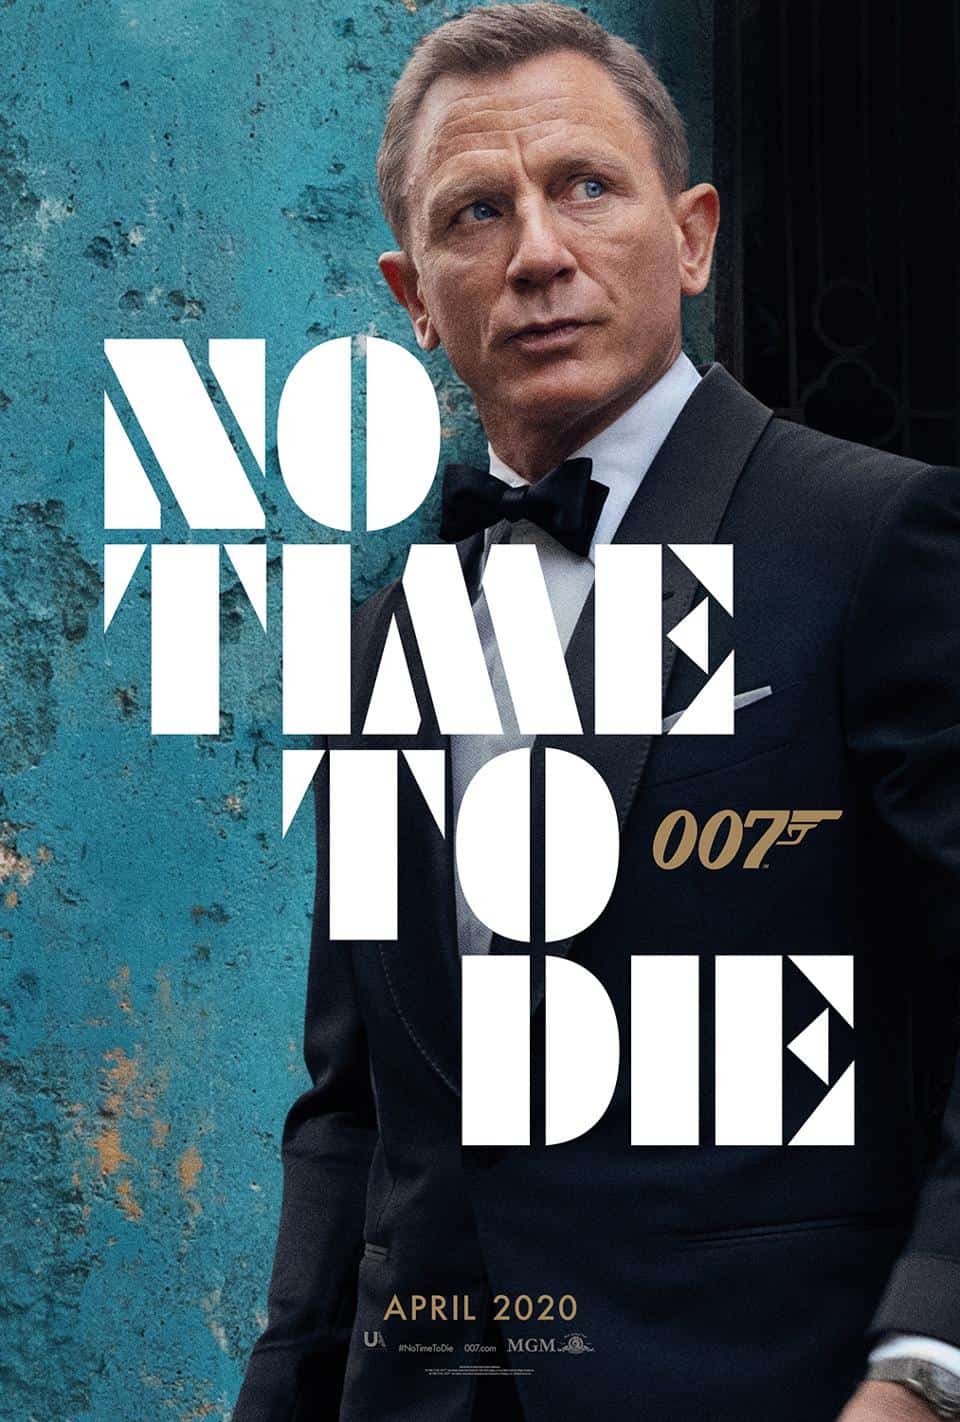 Daniel Craig as James Bond with help from Phoebe Waller-Bridge of "Fleabag"